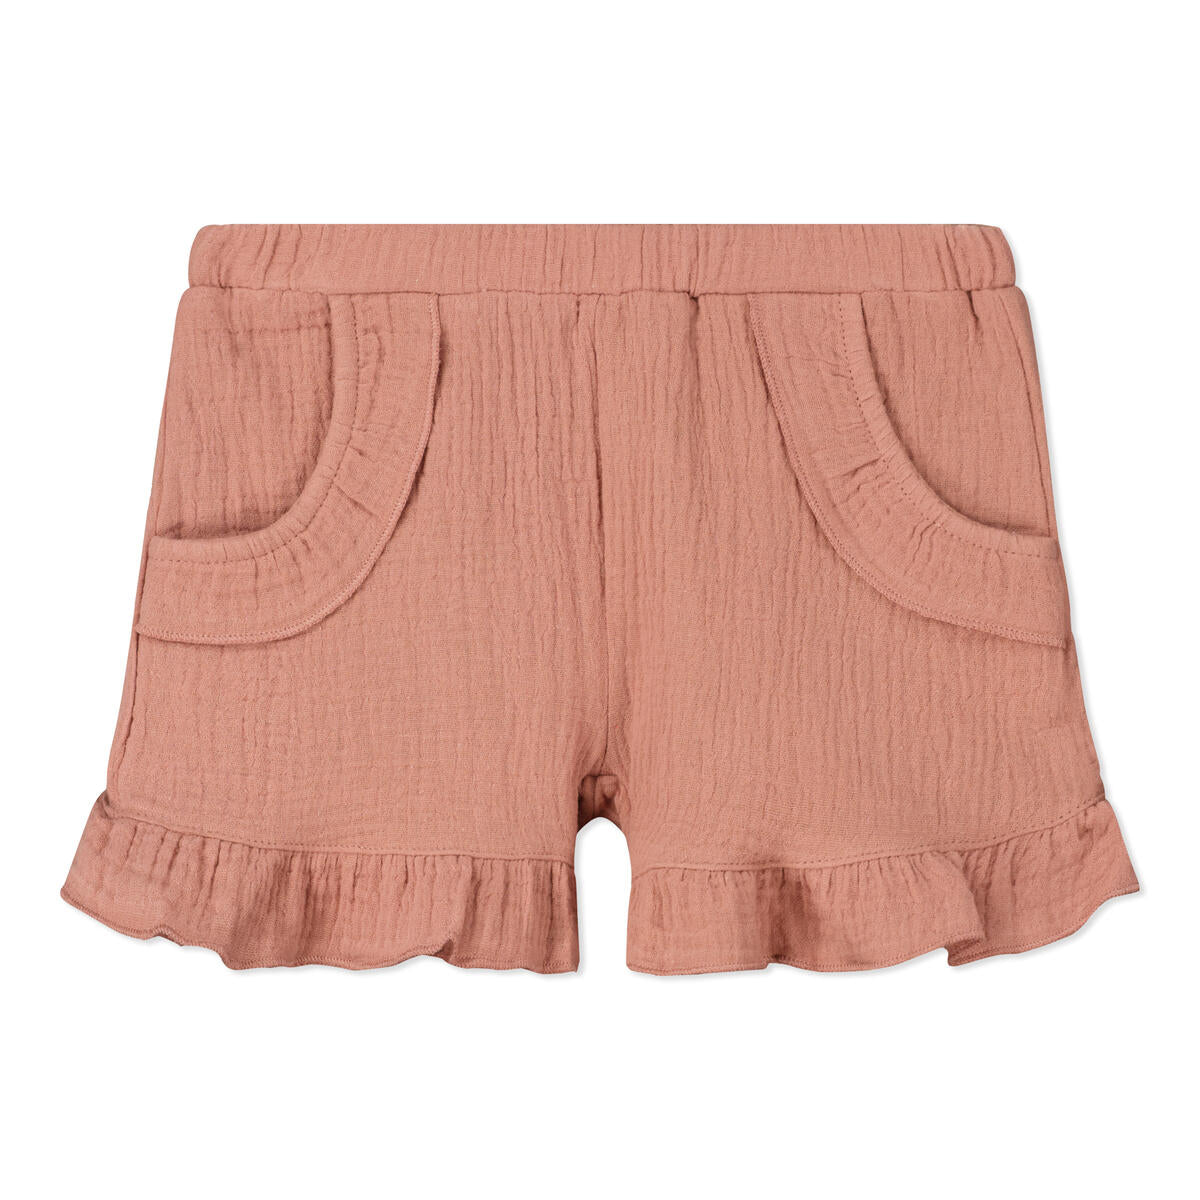 Ettie and h Lyra shorts pink, paprika, dressy shorts, little girl, baby girl, ruffles